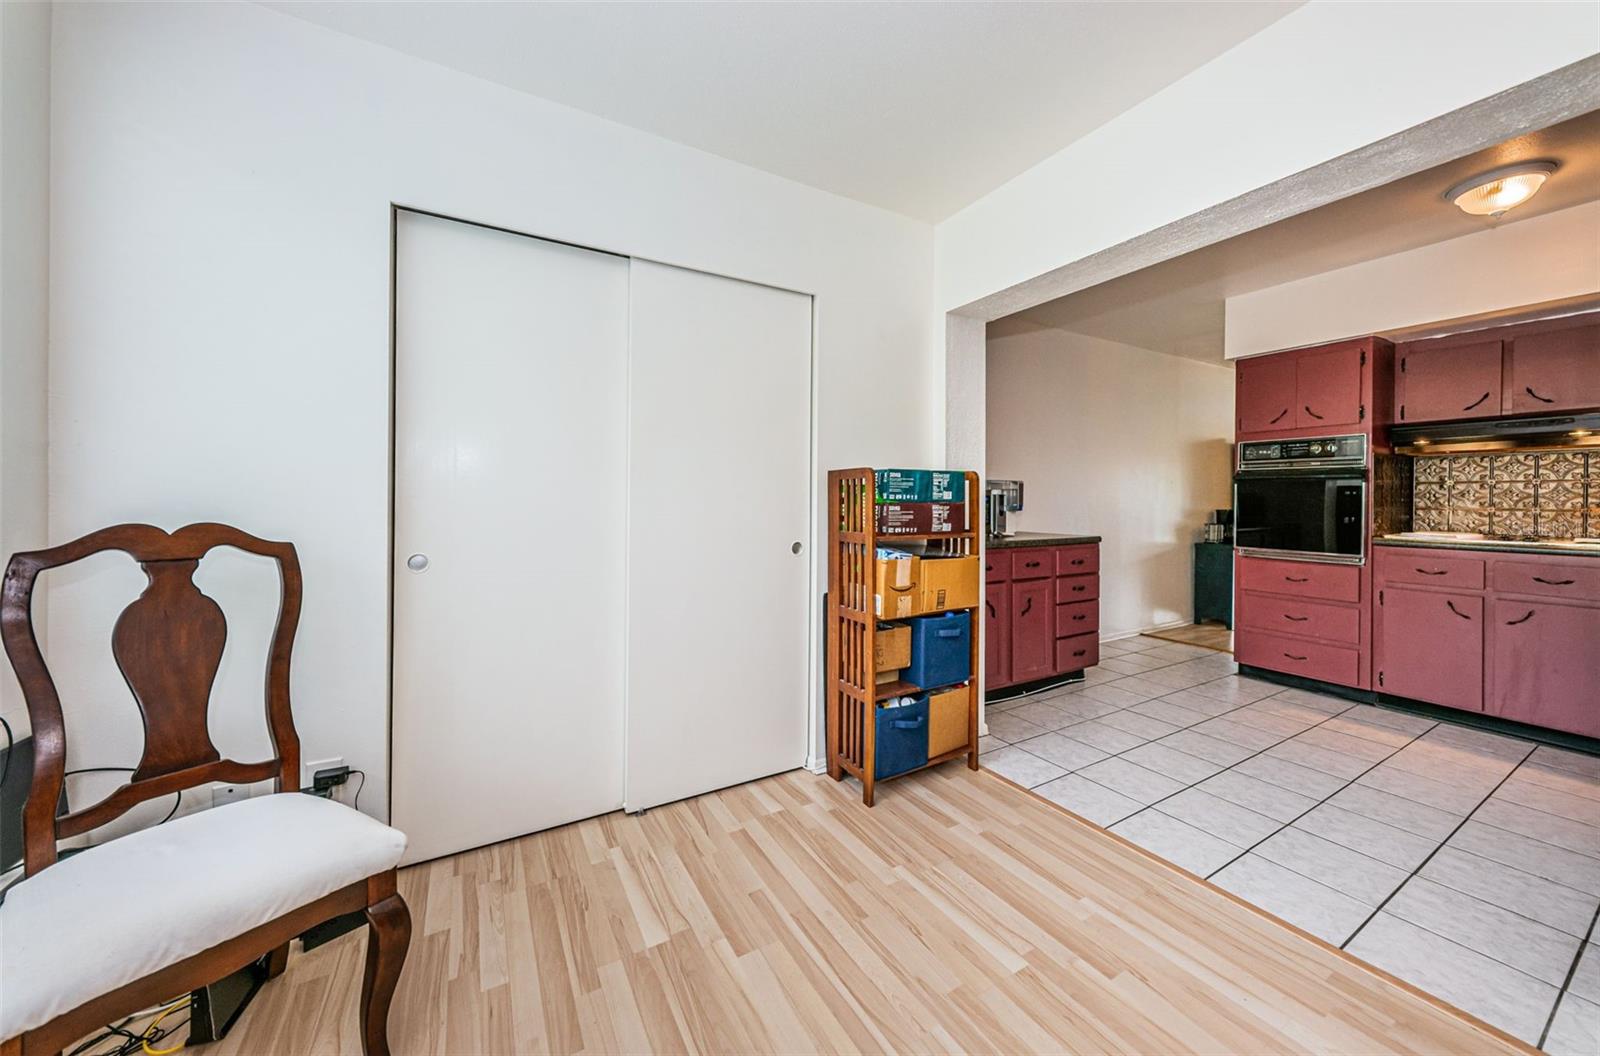 Florida room/flex space adjacent to kitchen